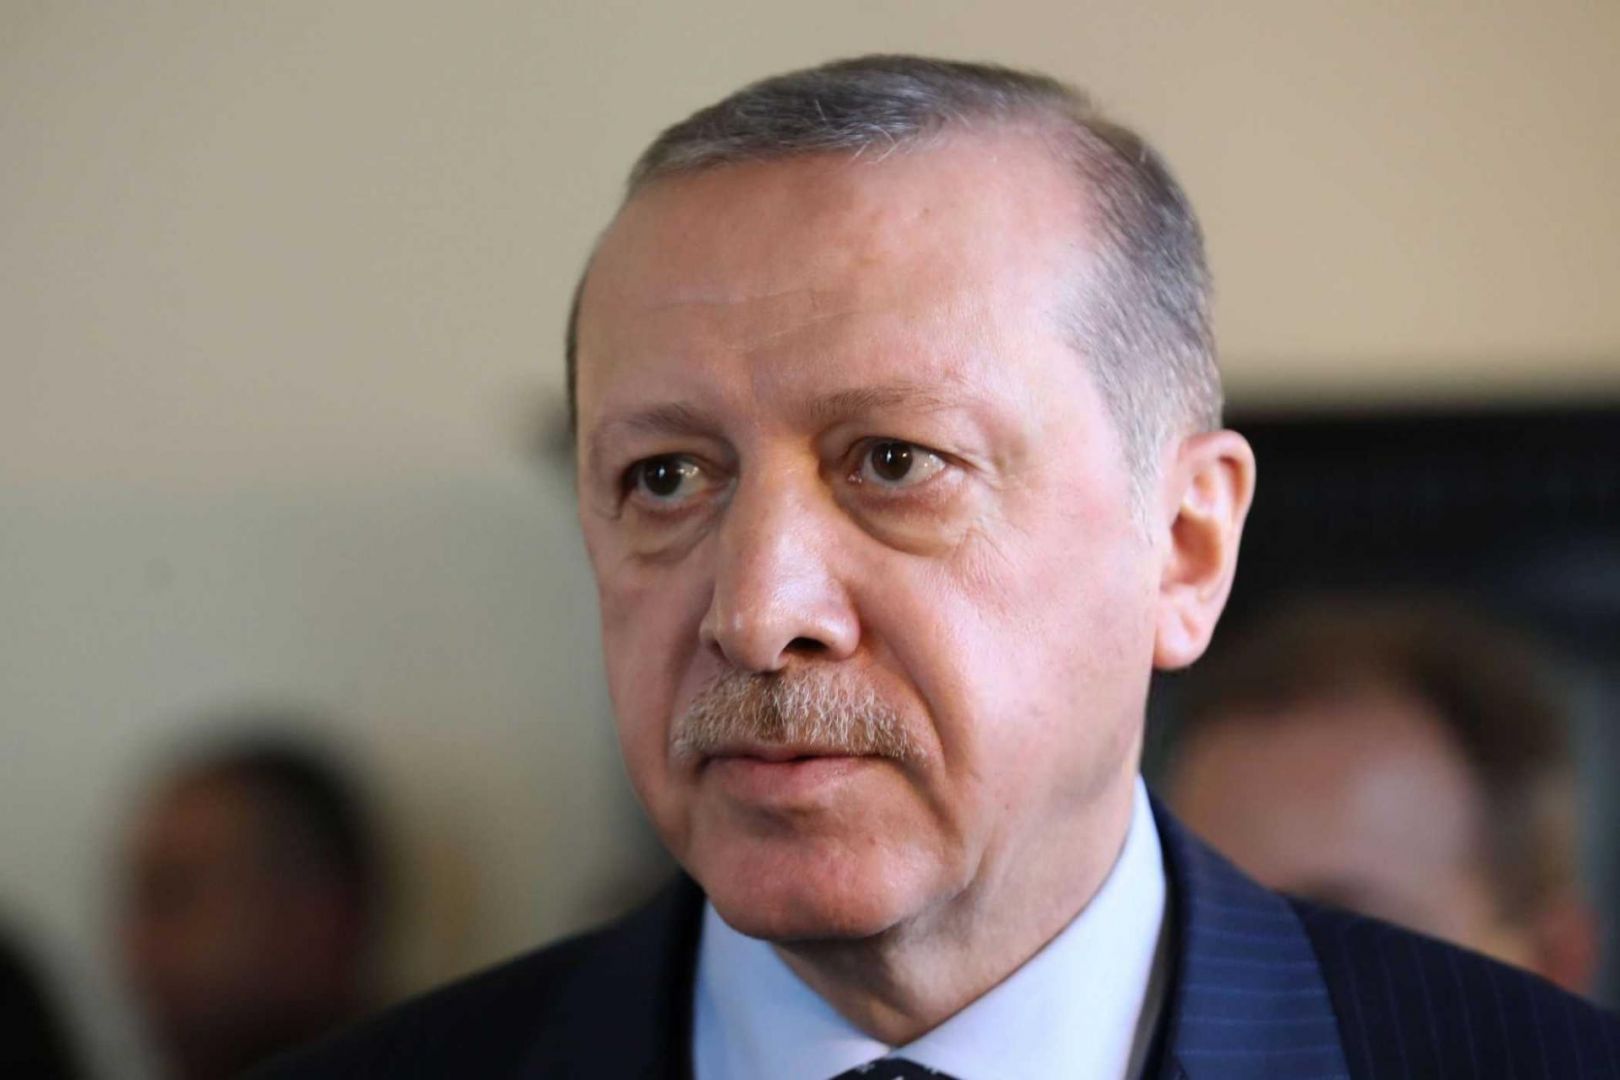 Erdogan: No support for Sweden's NATO bid over provocations